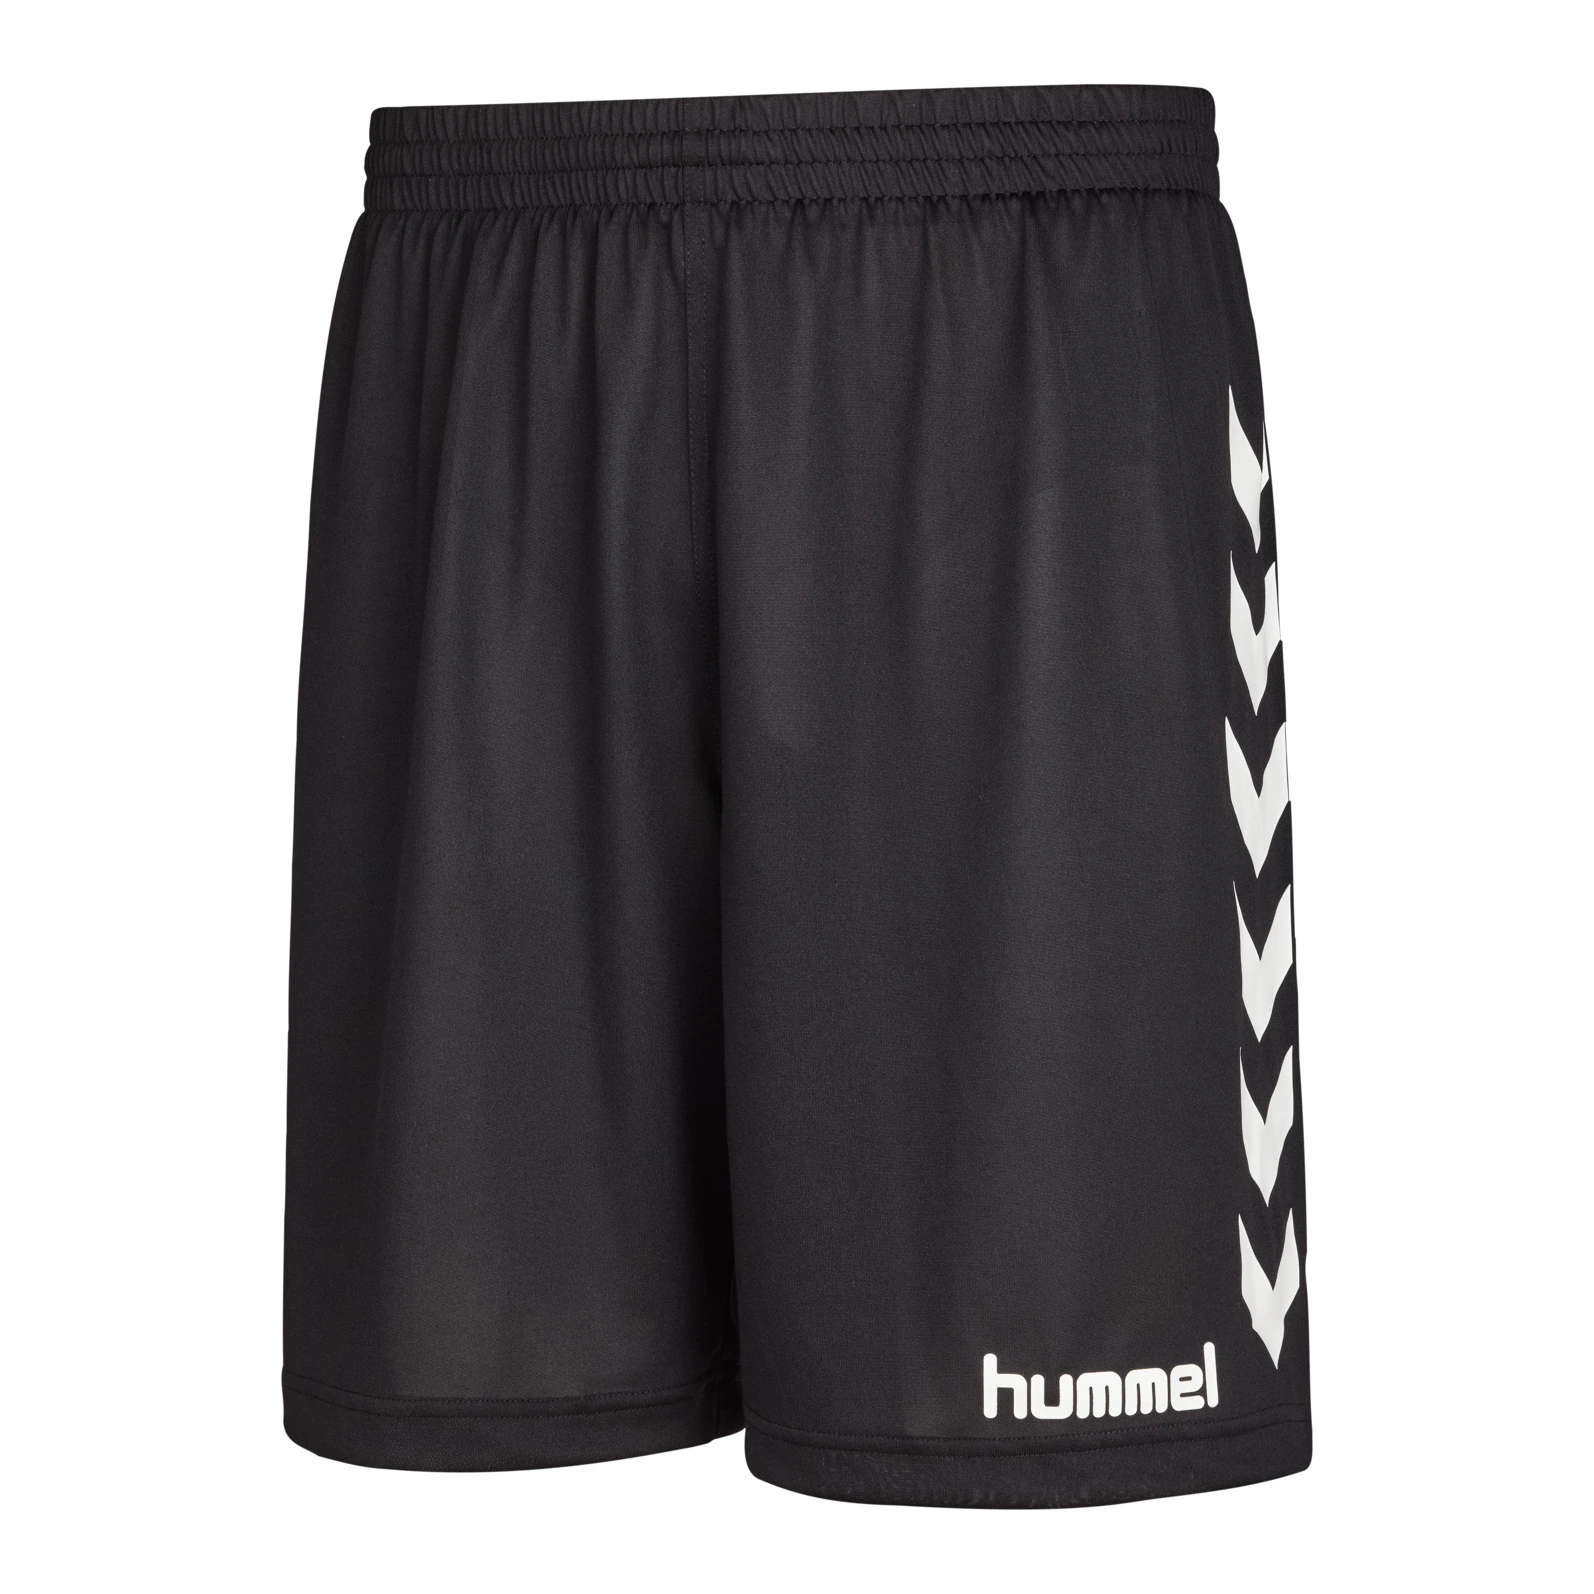 HUMMEL Fussball___Teamsport_Textil___Torwarthosen_Essential_Torwartshort 10815 2001 BLACK